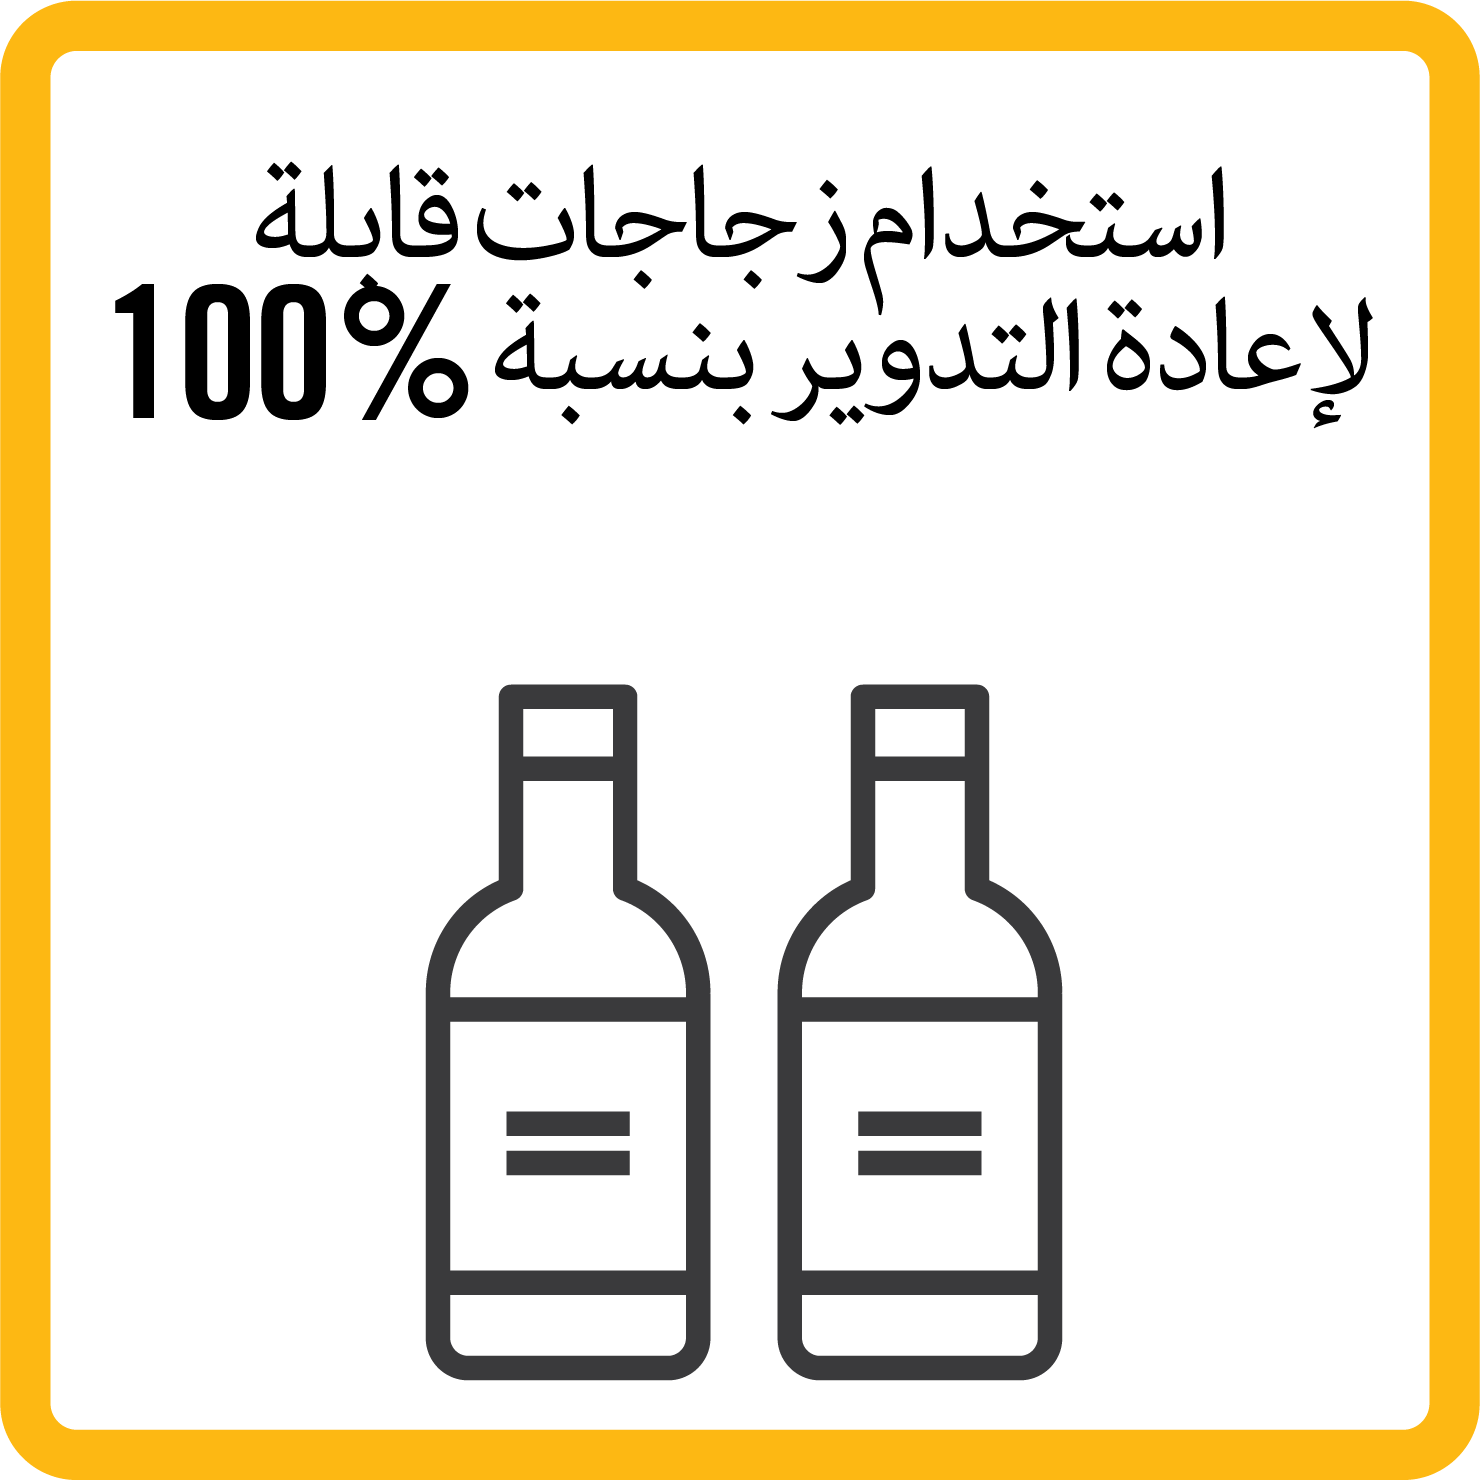 Sustainability glass bottles_BORDER_ARABIC